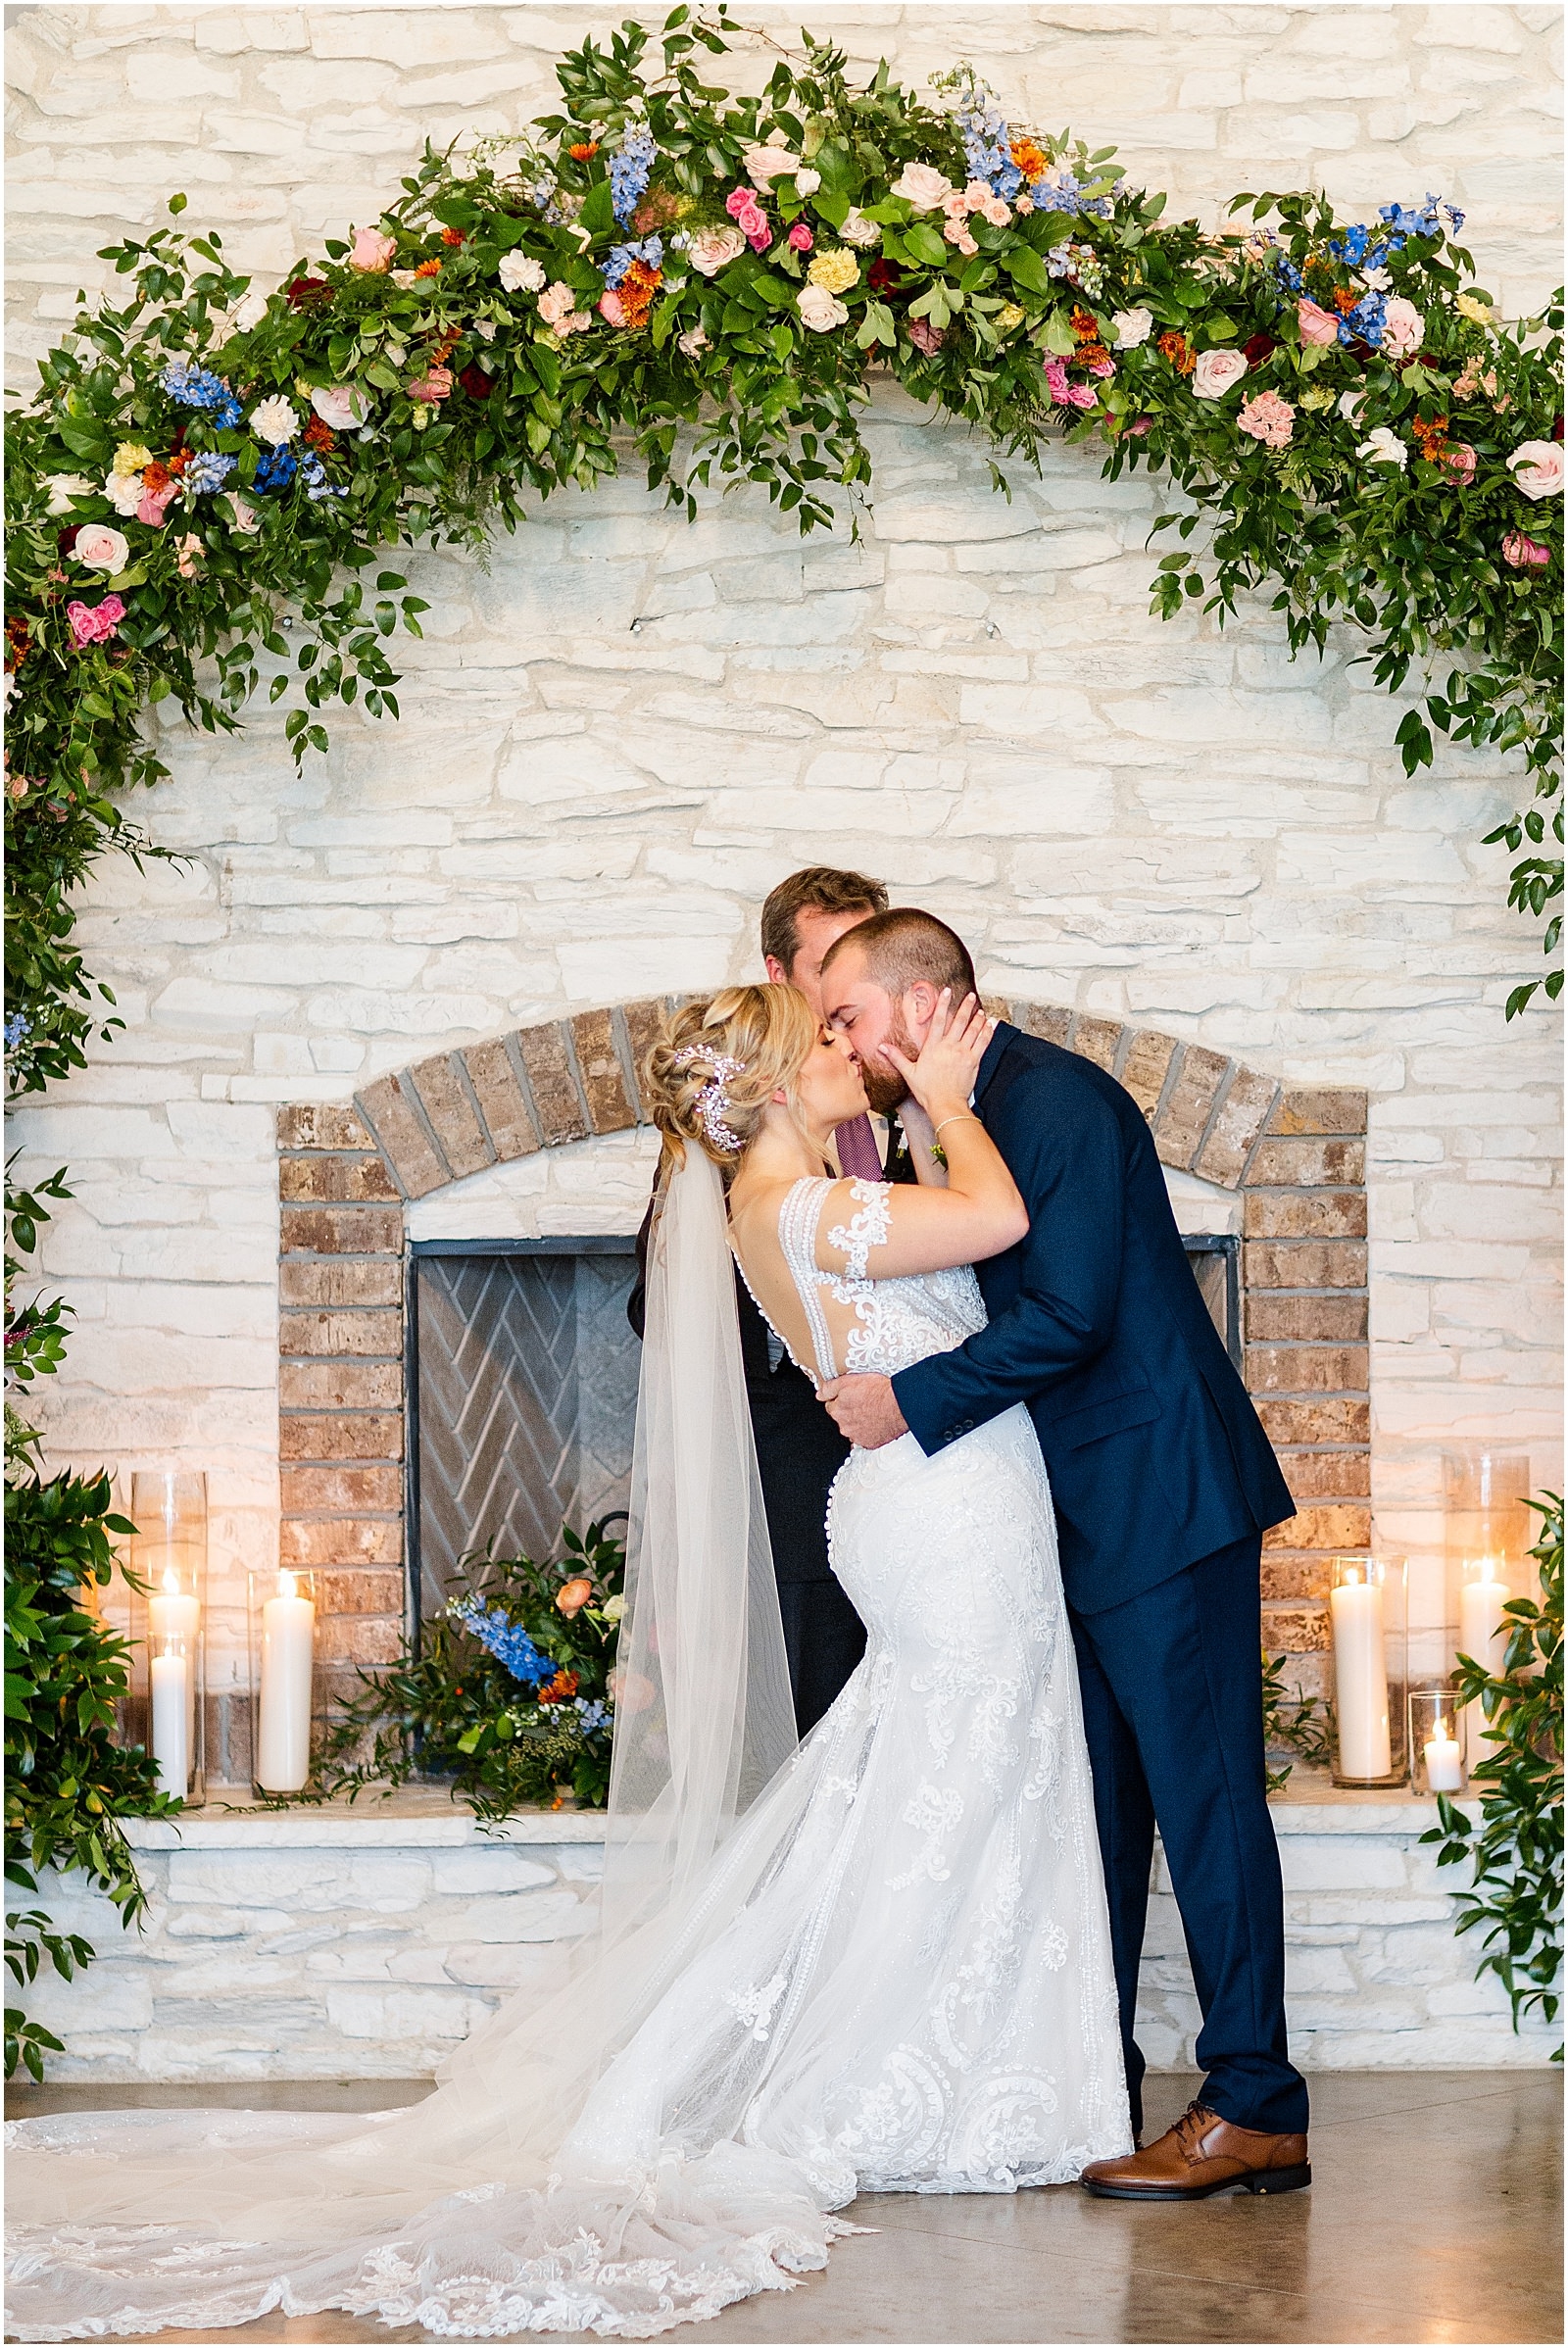 Mackenzie and Jourdan's Wedding at White Chateau | Bret and Brandie Photography0088.jpg